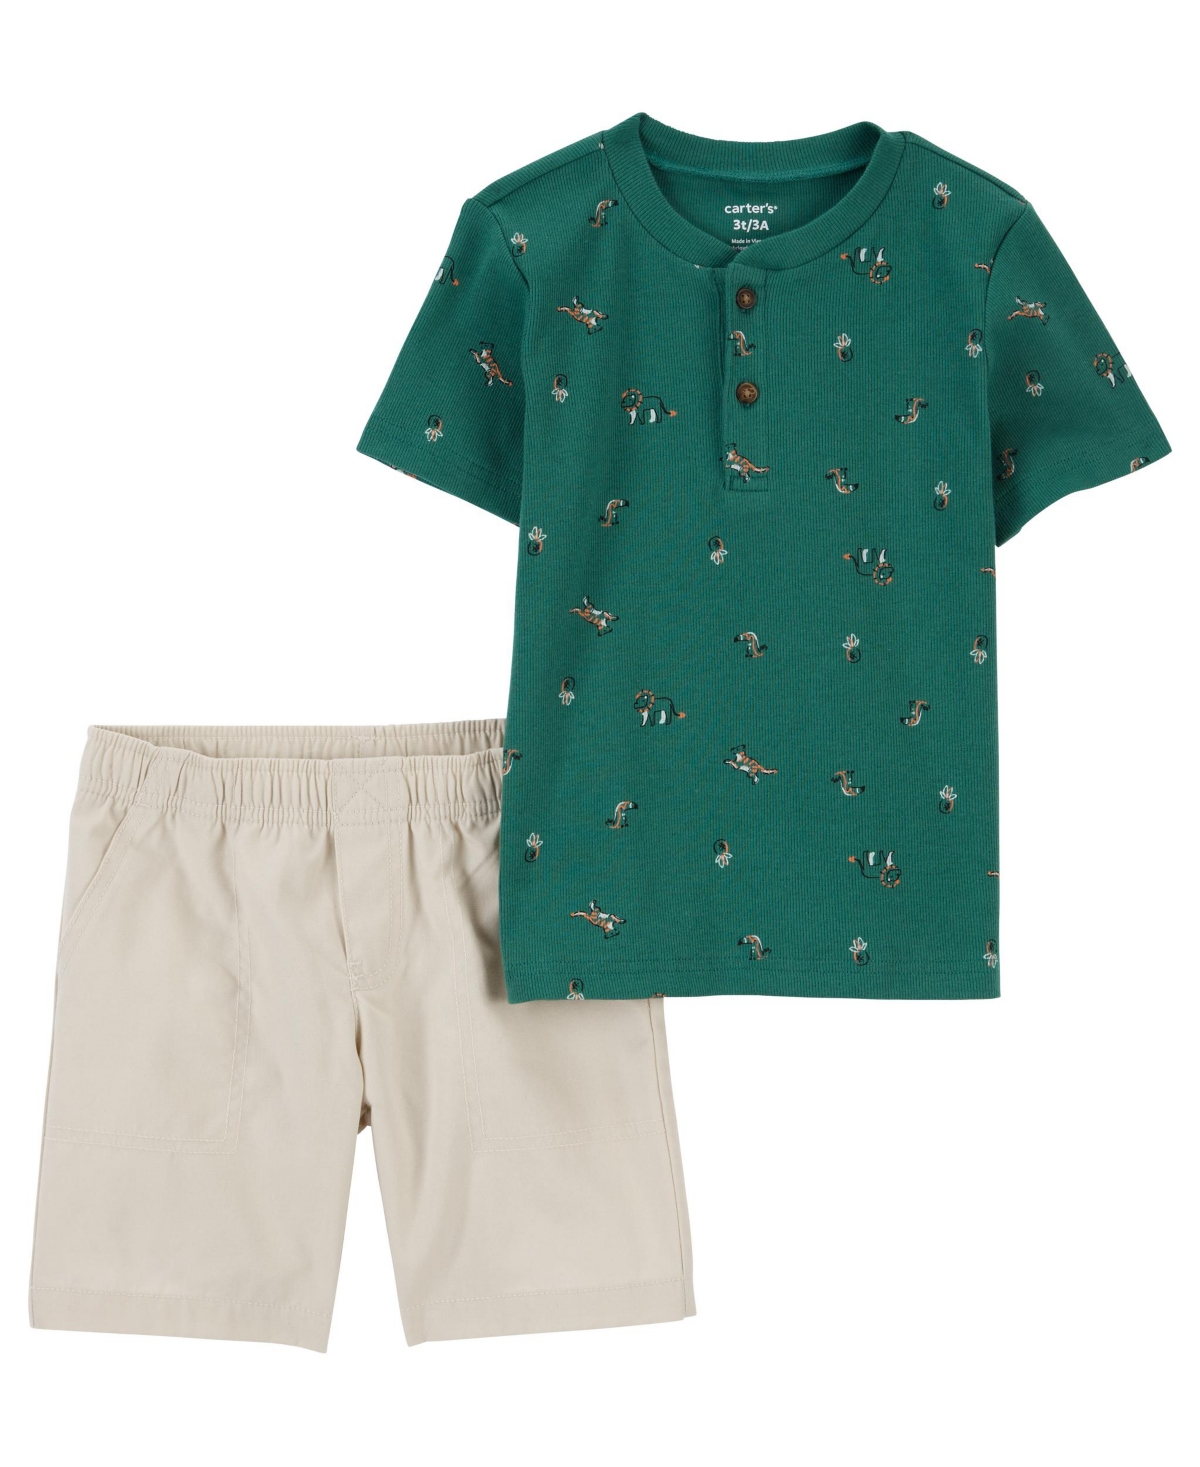 Carter's Babies' Toddler Boys Shirt And Shorts, 2 Piece Set In Green